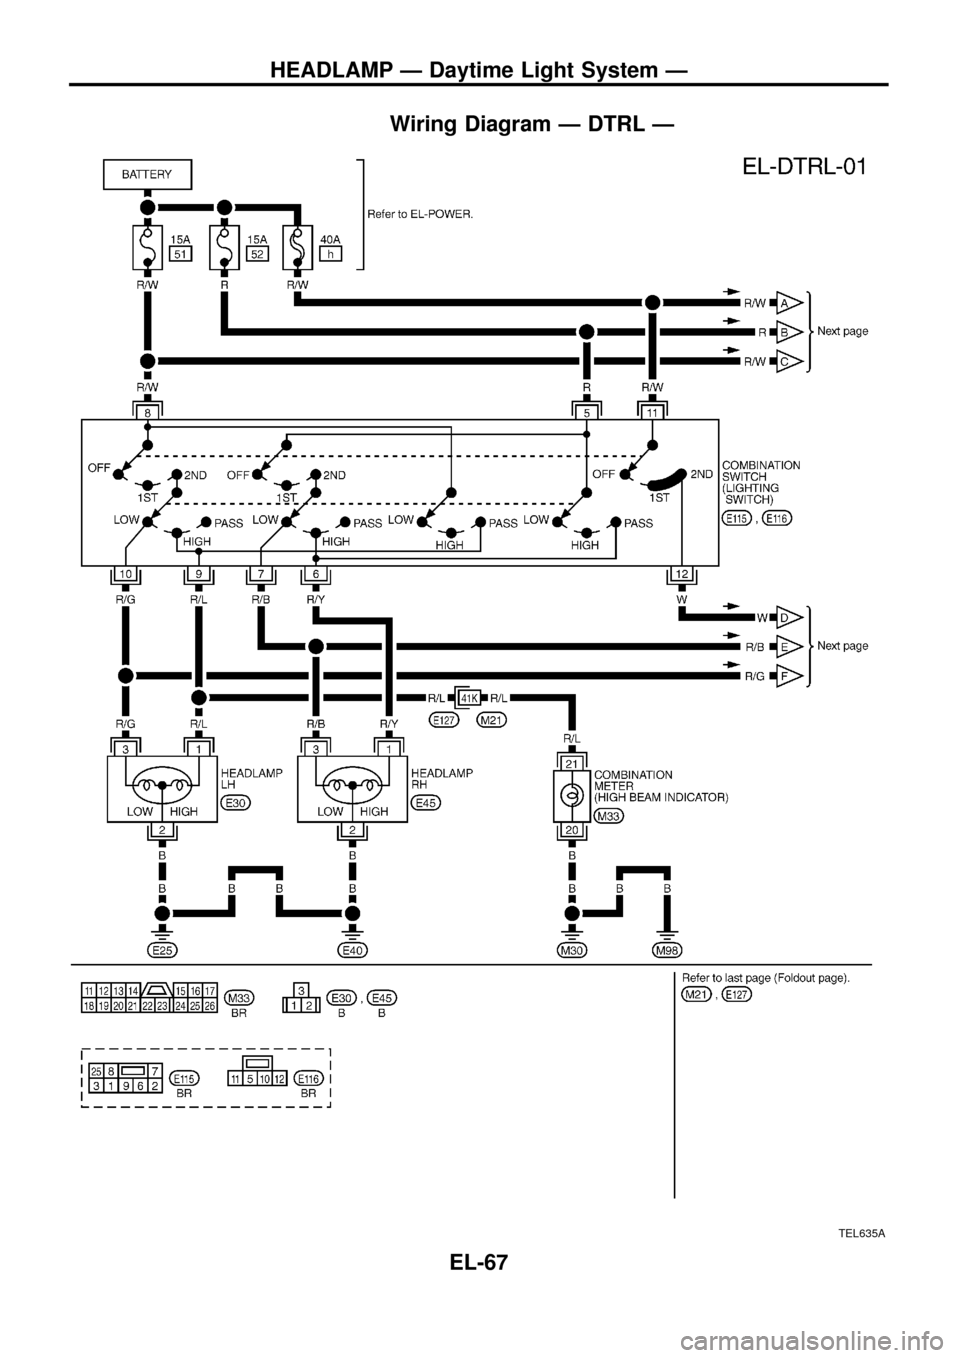 NISSAN PATROL 1998 Y61 / 5.G Electrical System Workshop Manual Wiring Diagram Ð DTRL Ð
TEL635A
HEADLAMP Ð Daytime Light System Ð
EL-67 